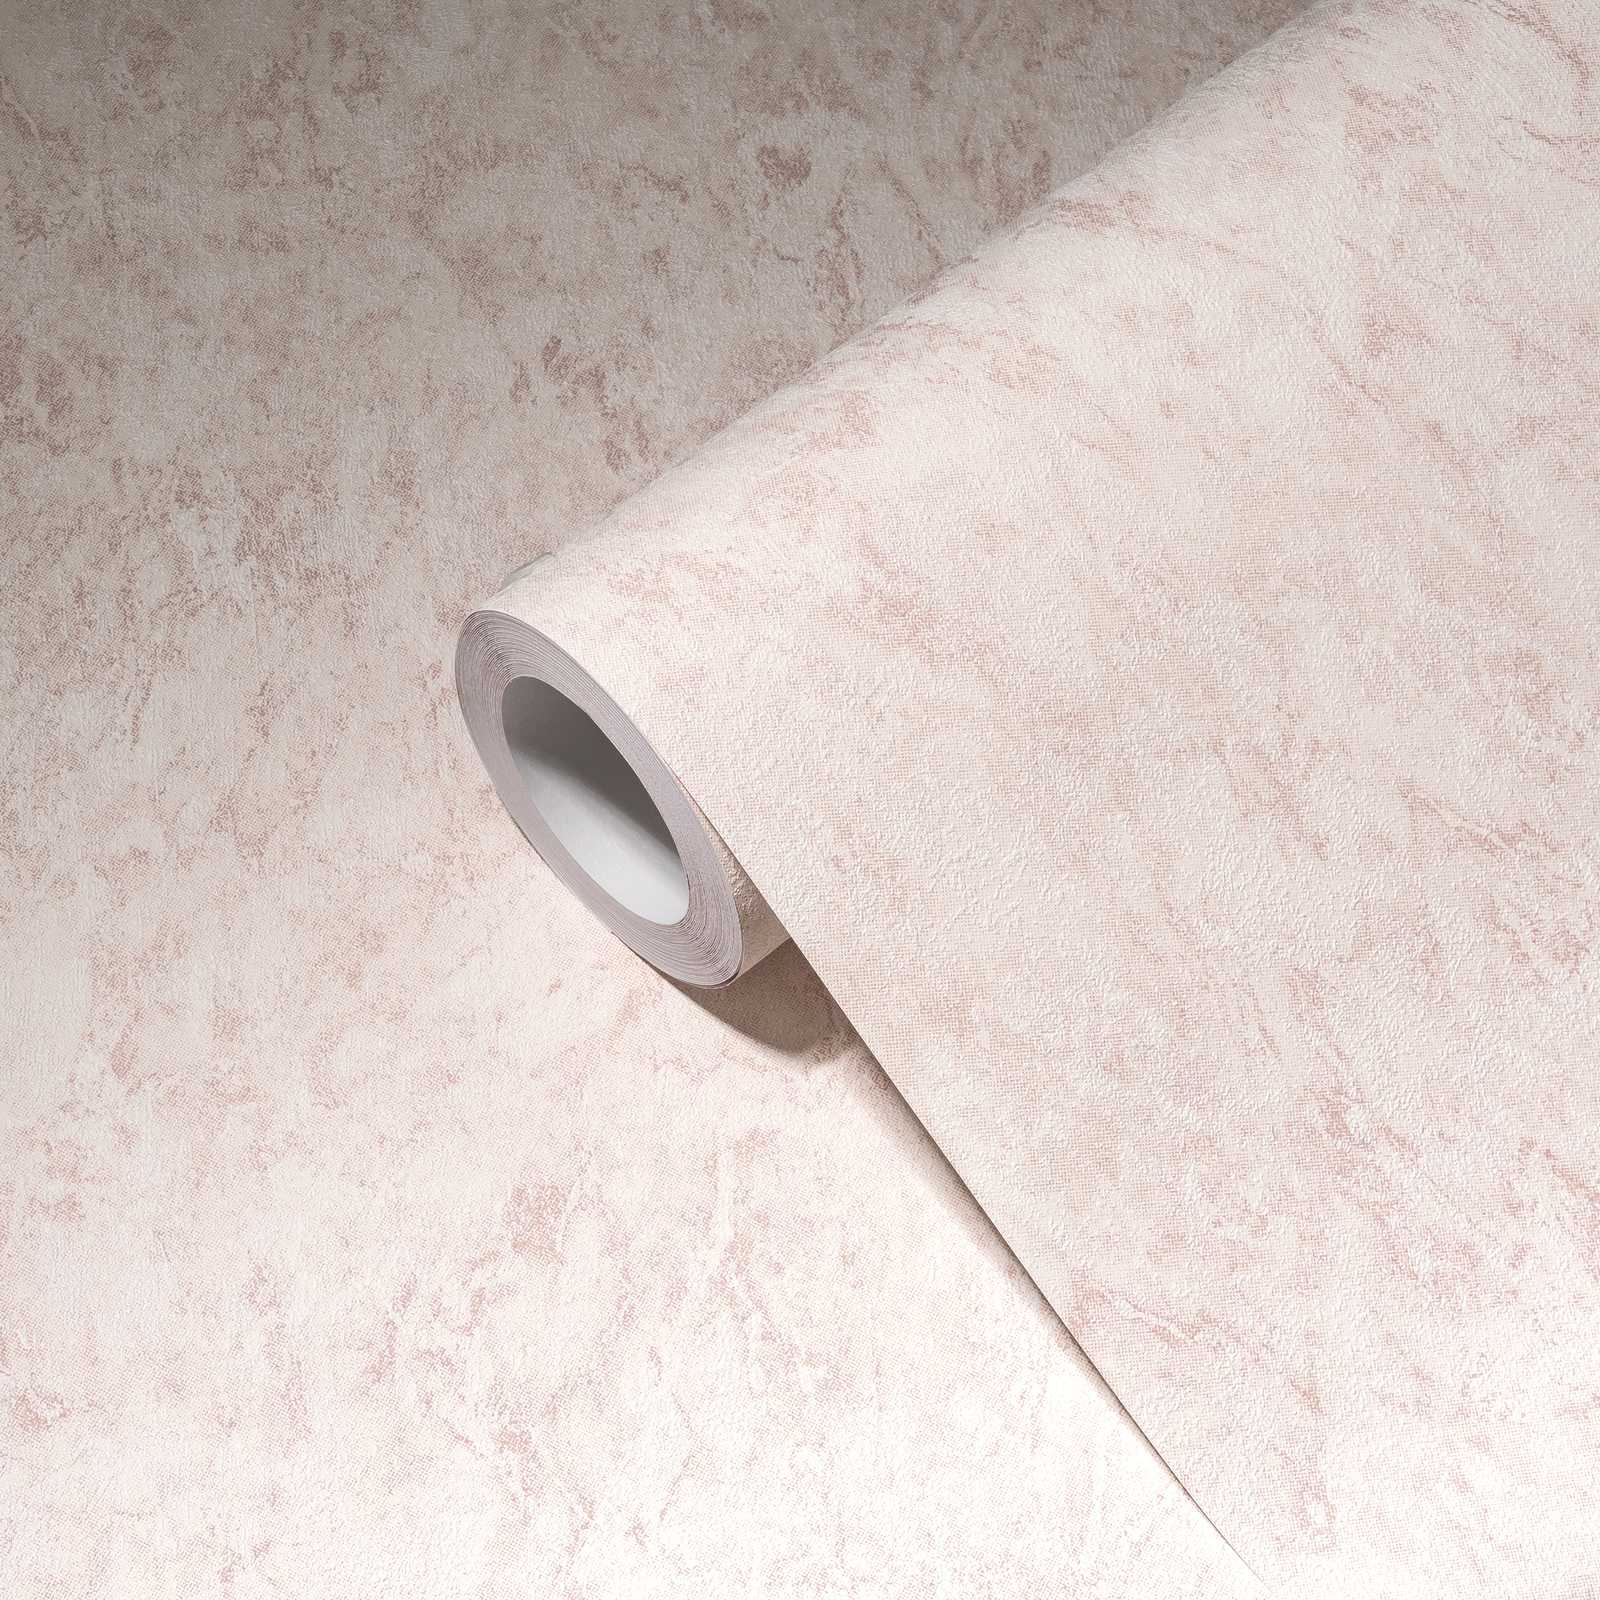             Plain wallpaper with texture effect & mottled design - pink, cream
        